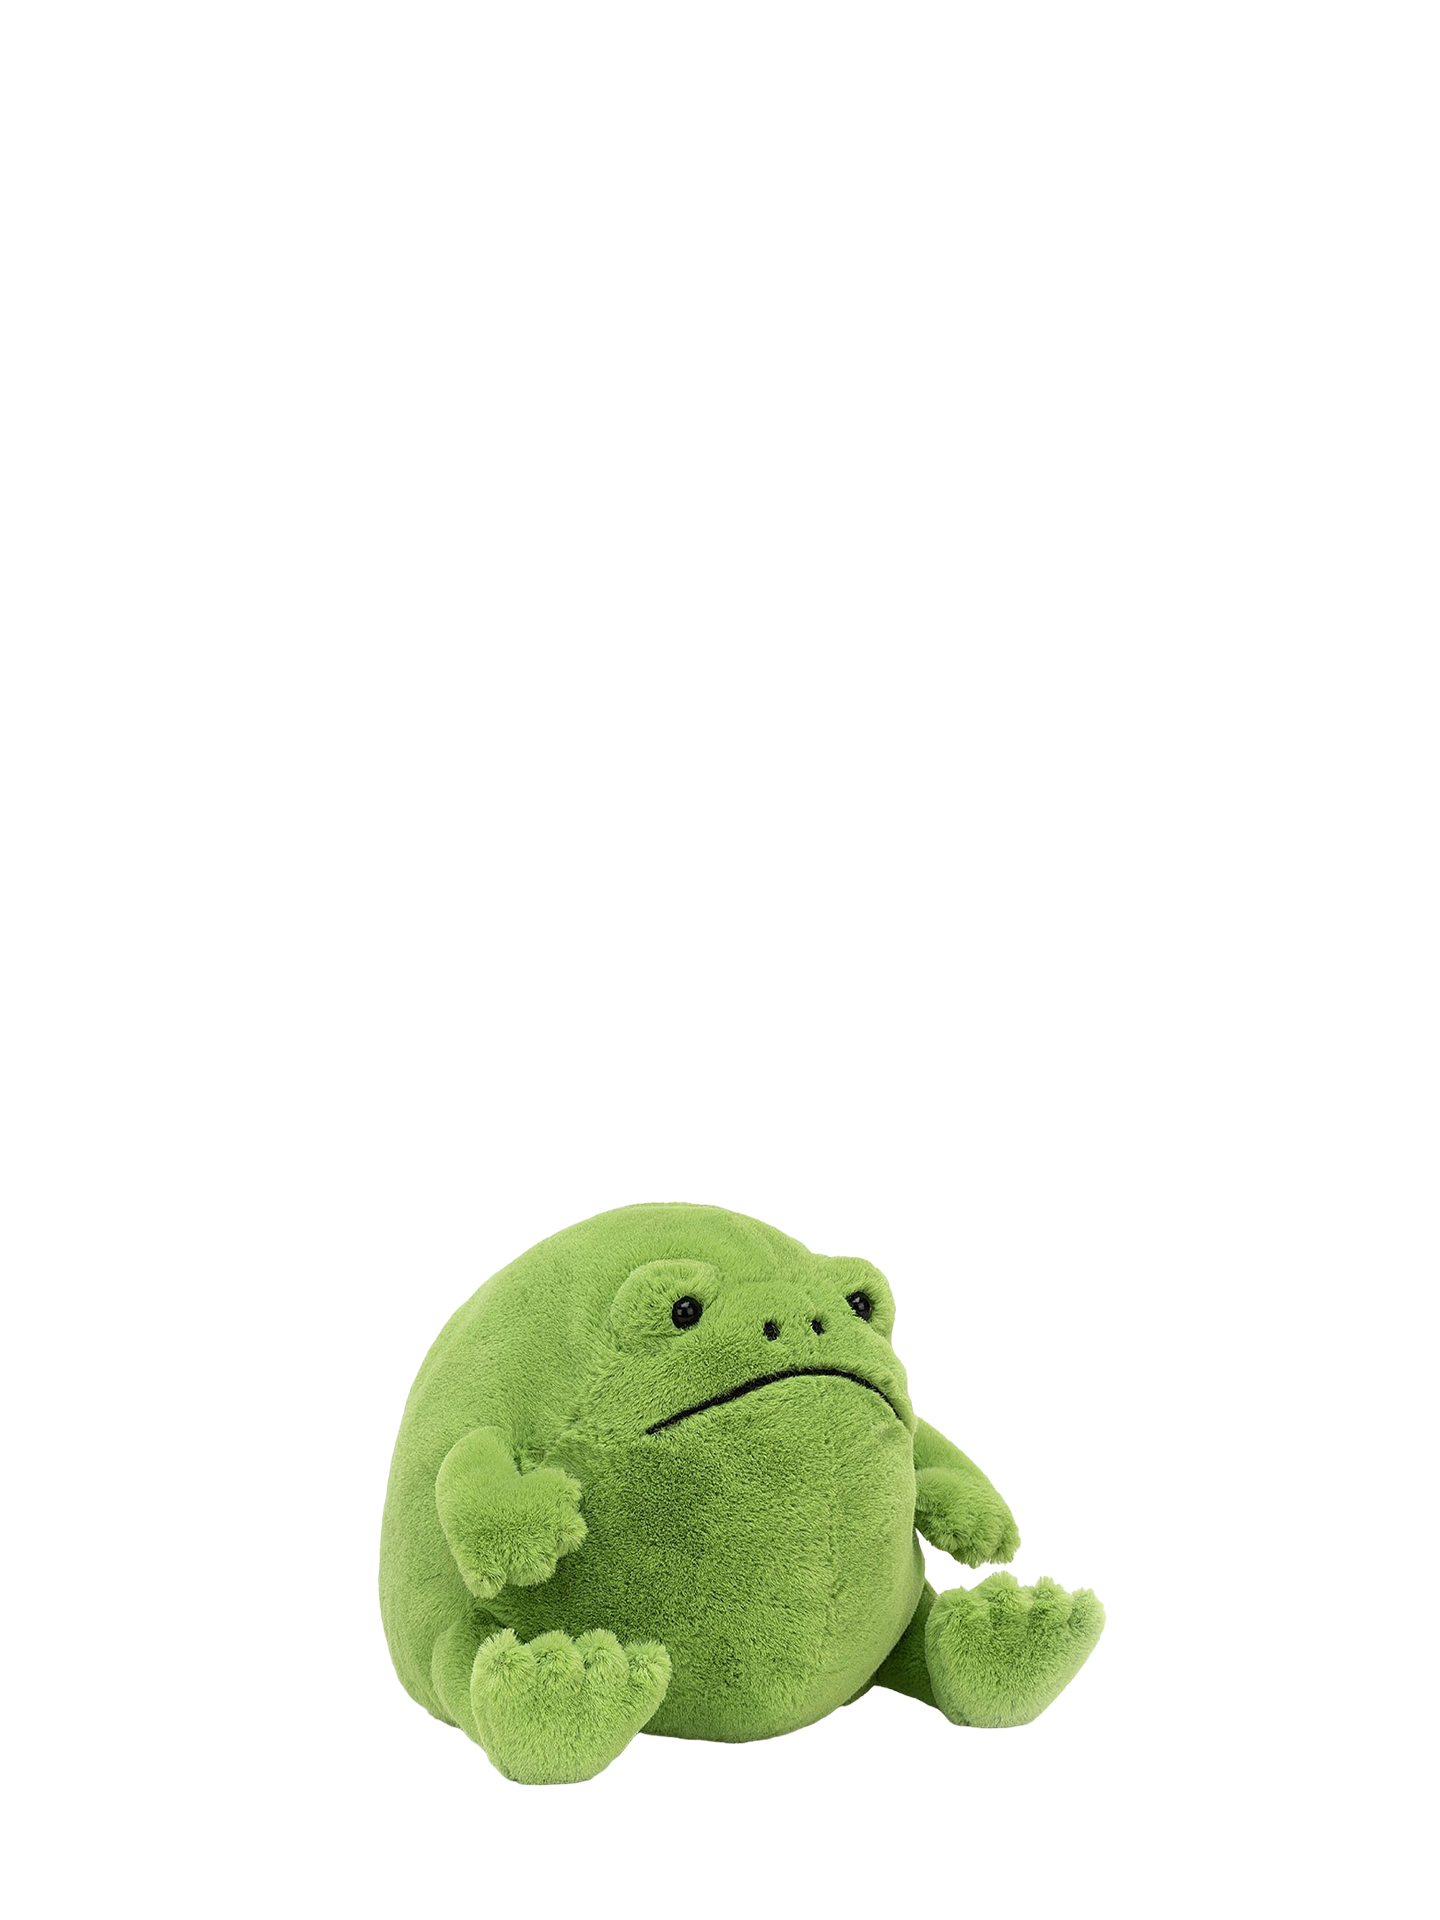 Ricky Rain Frog (Small) by Jellycat